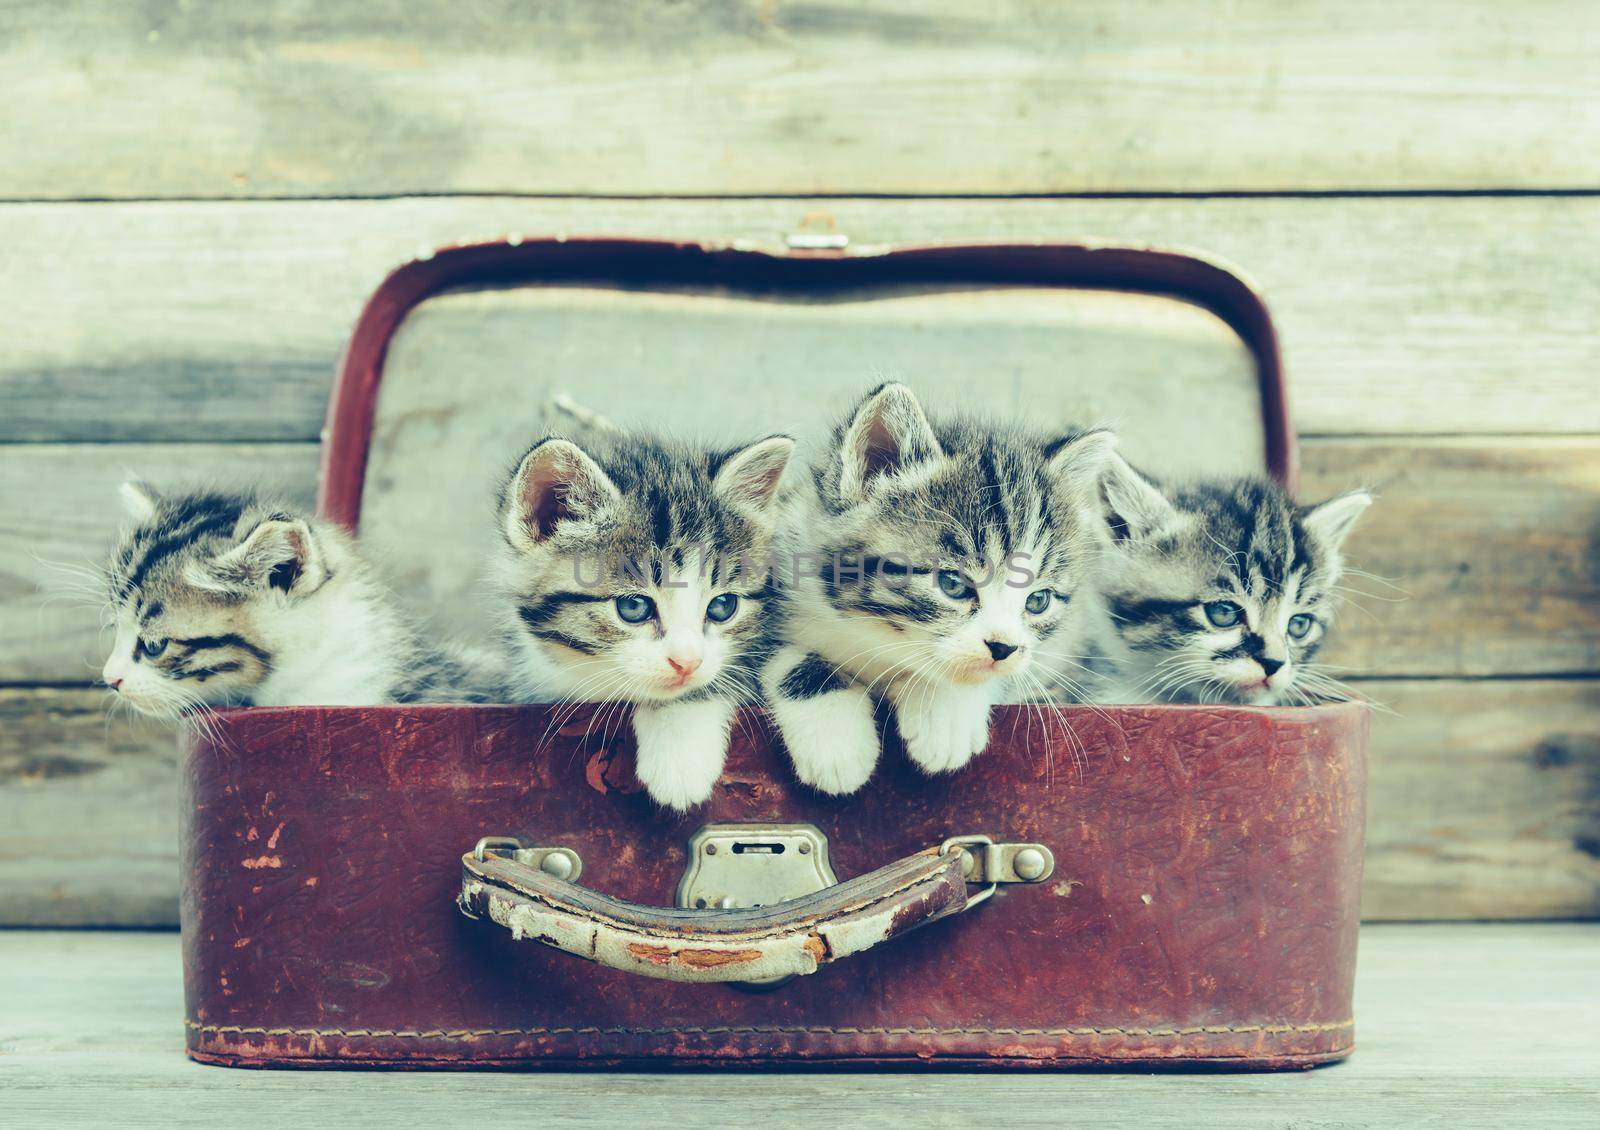 Kittens in a suitcase by alexAleksei